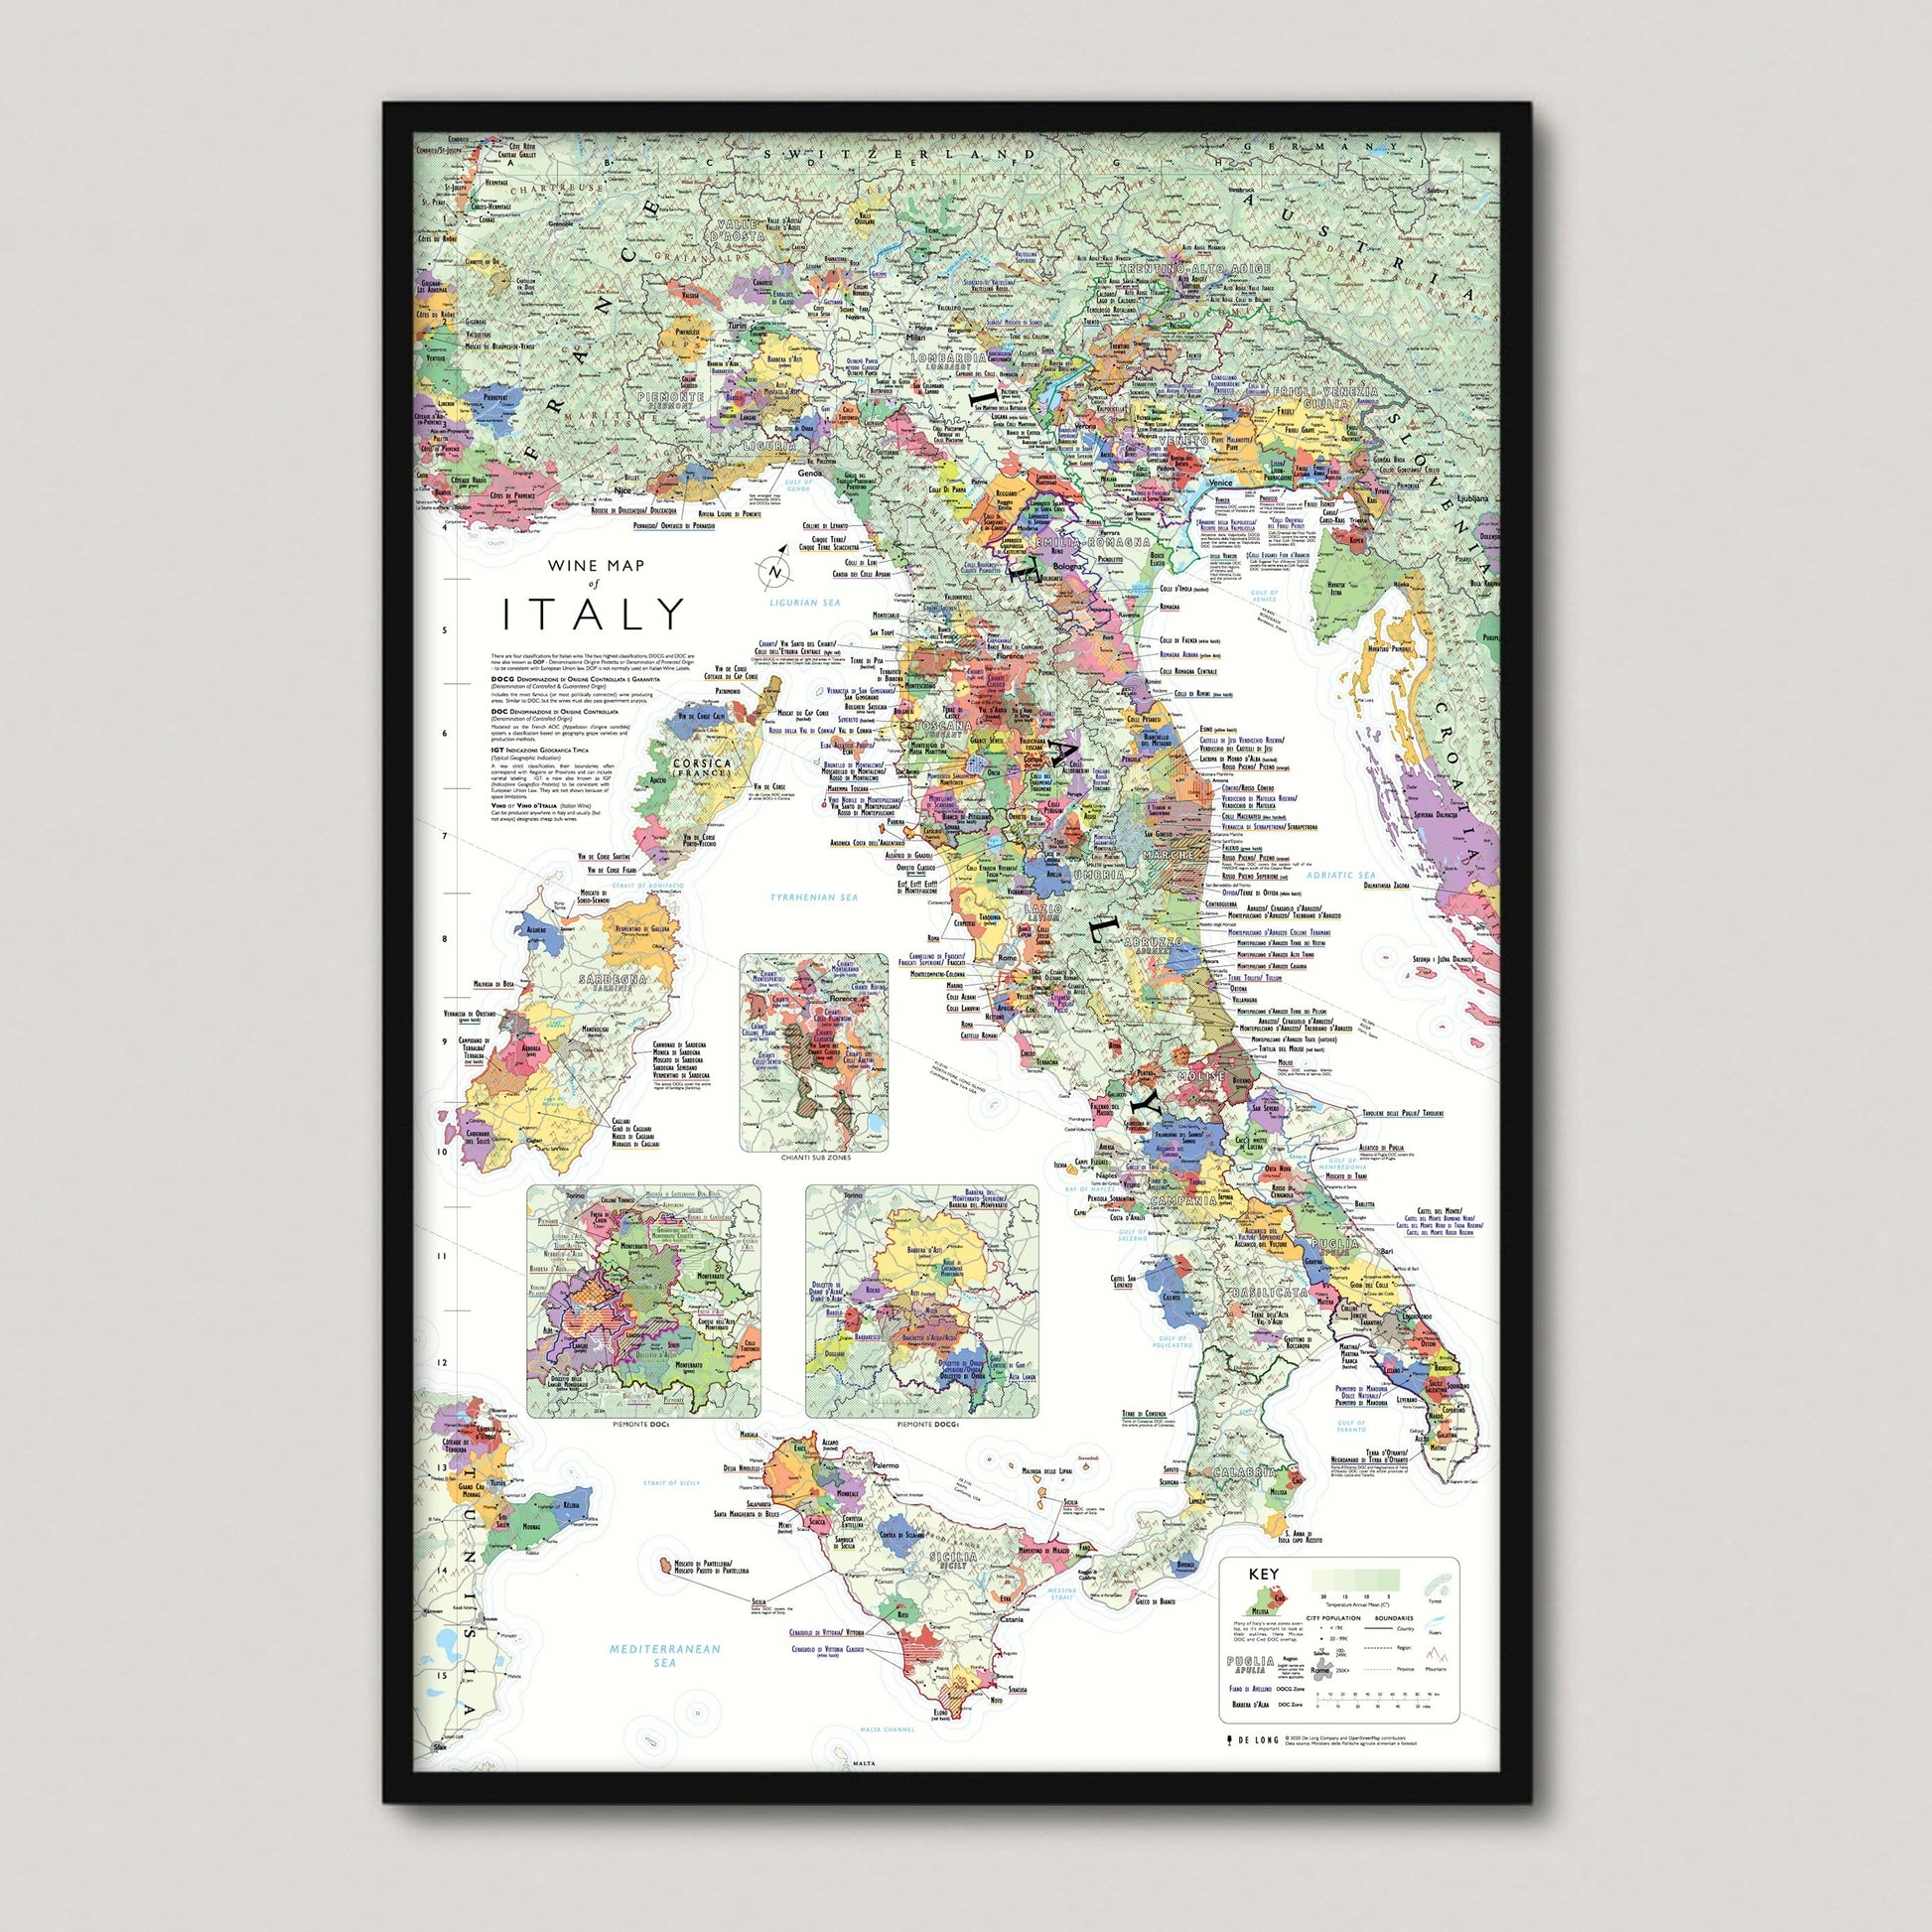 Wine Map of Italy framed